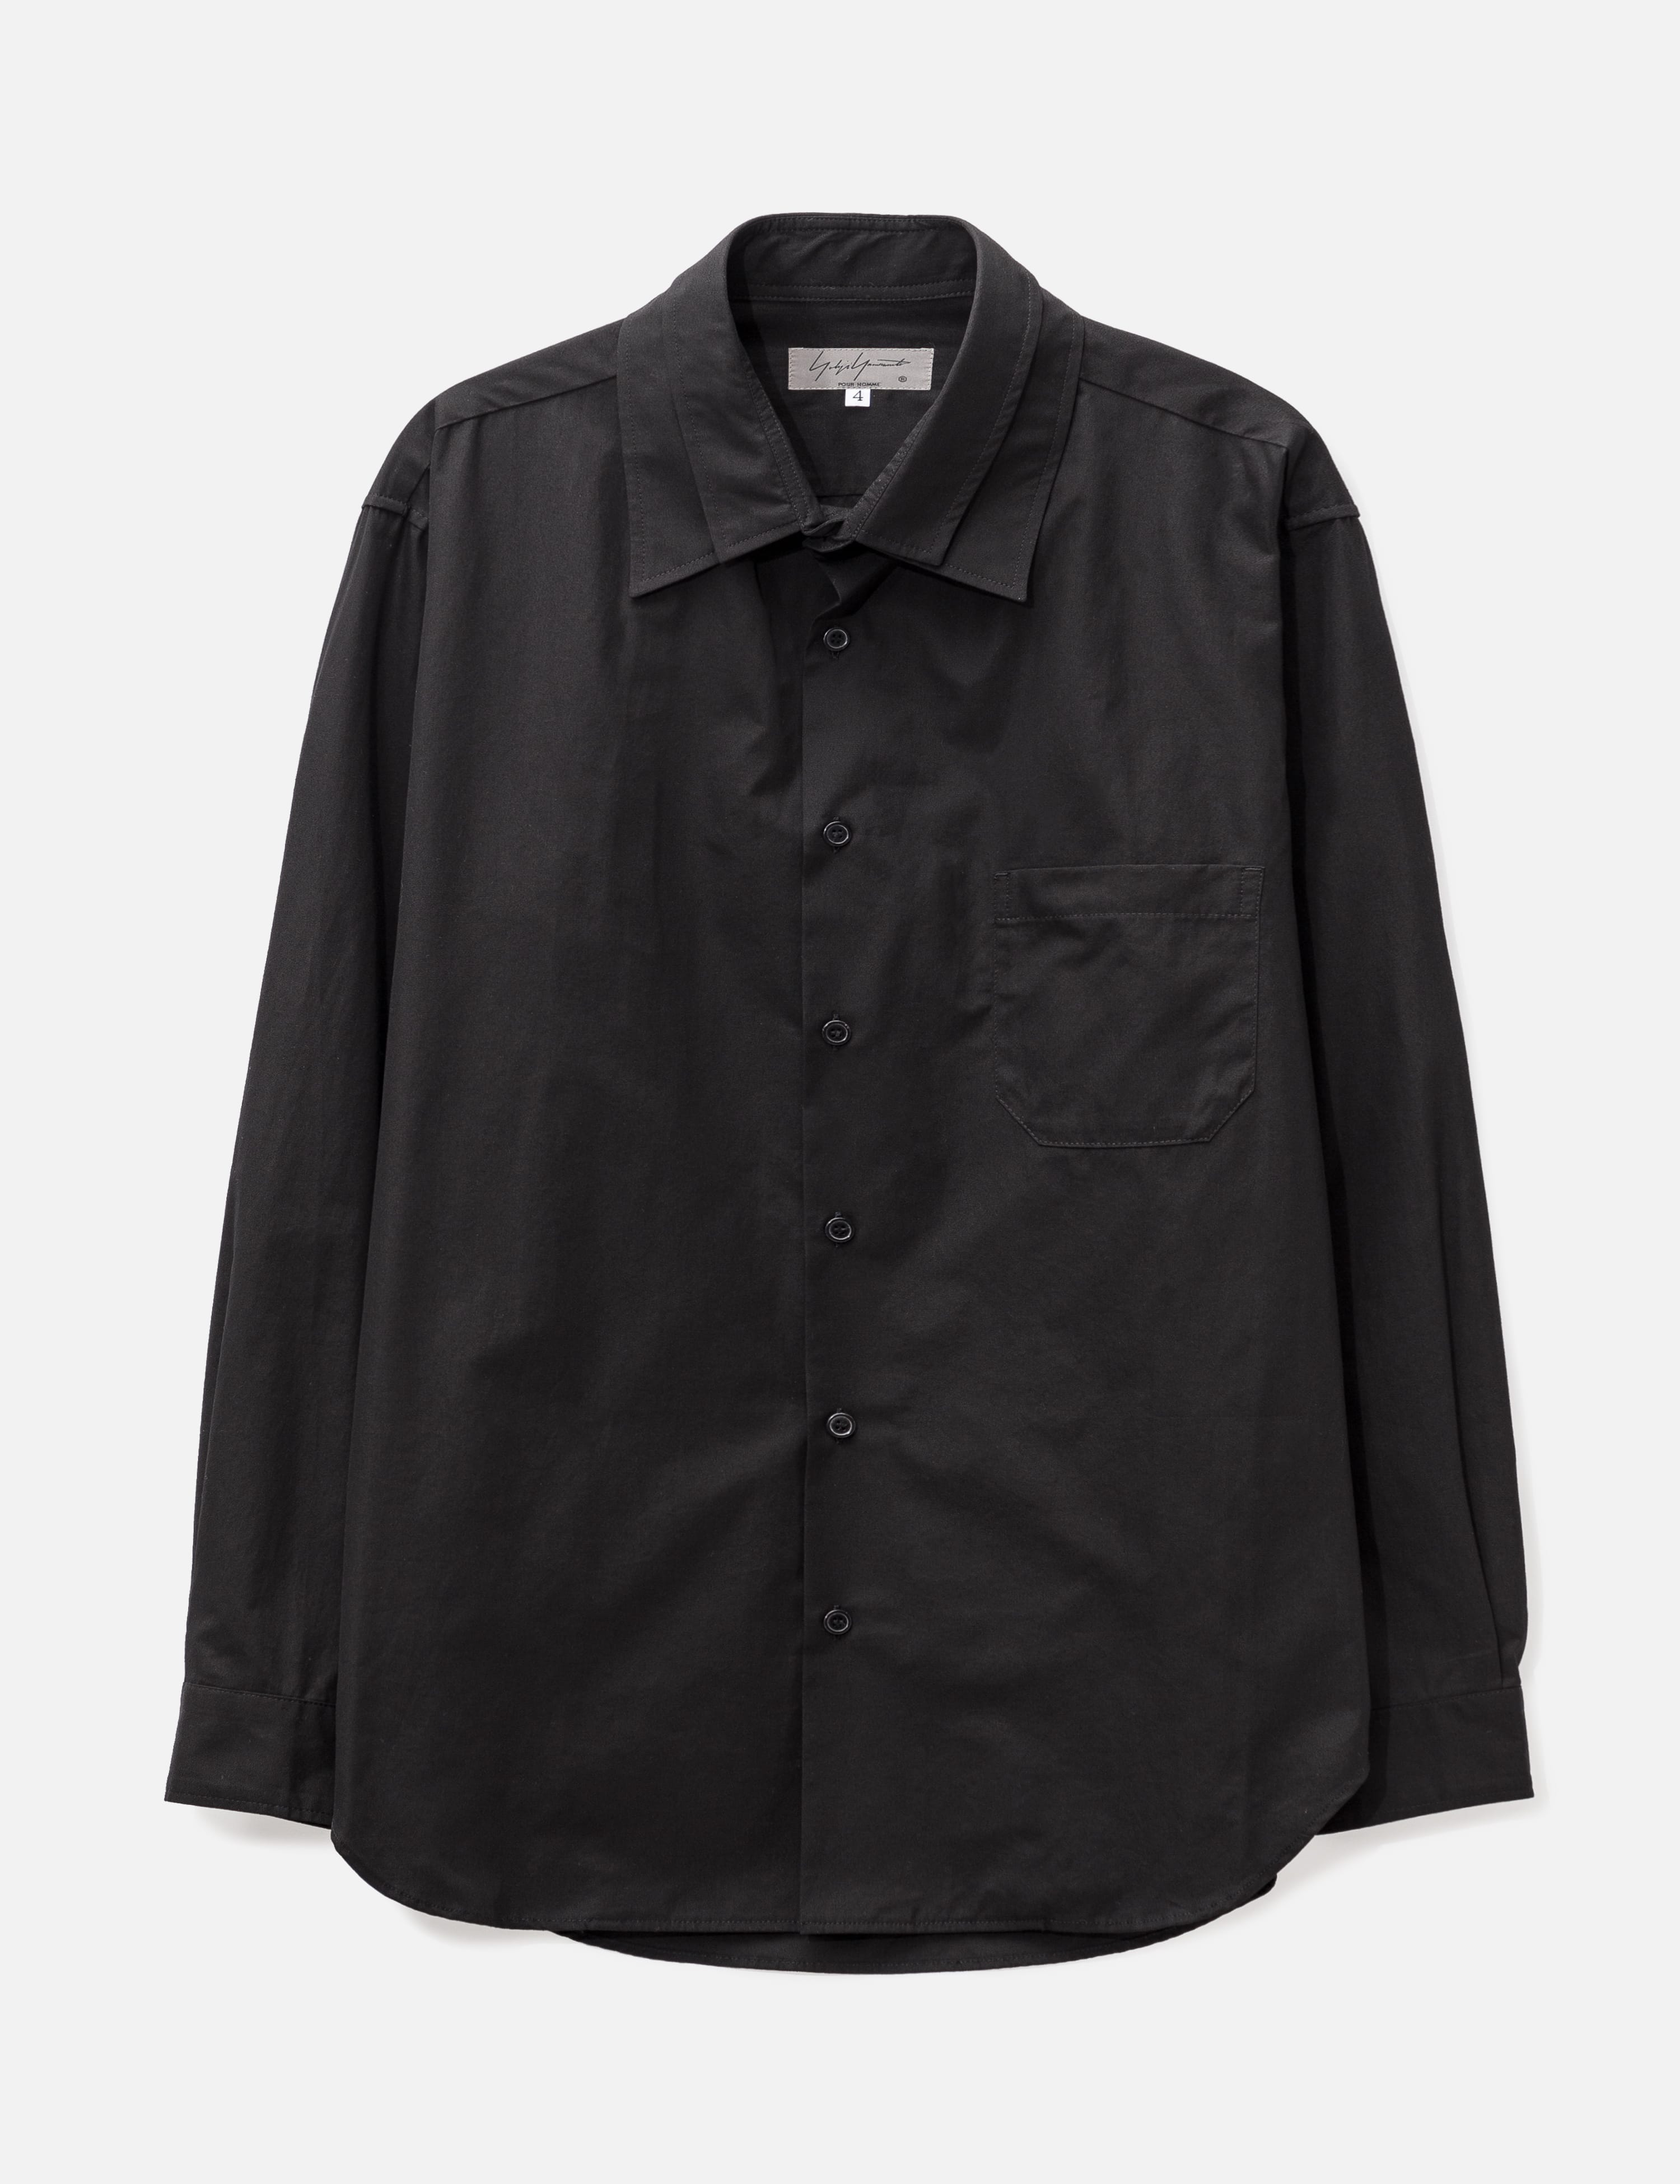 Yohji Yamamoto Pour Homme Double Collar Shirt